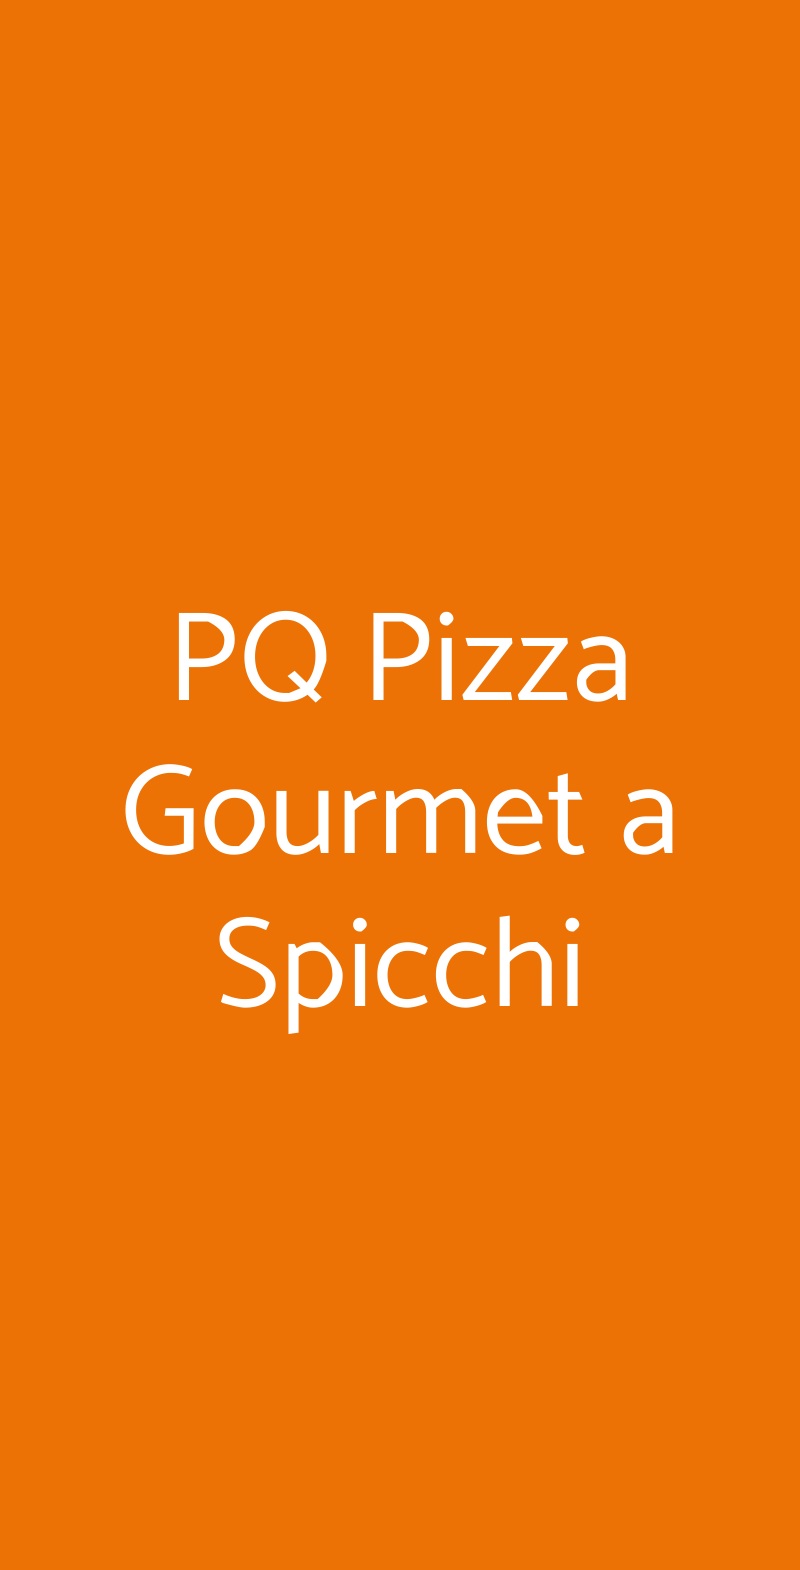 PQ Pizza Gourmet a Spicchi Milano menù 1 pagina